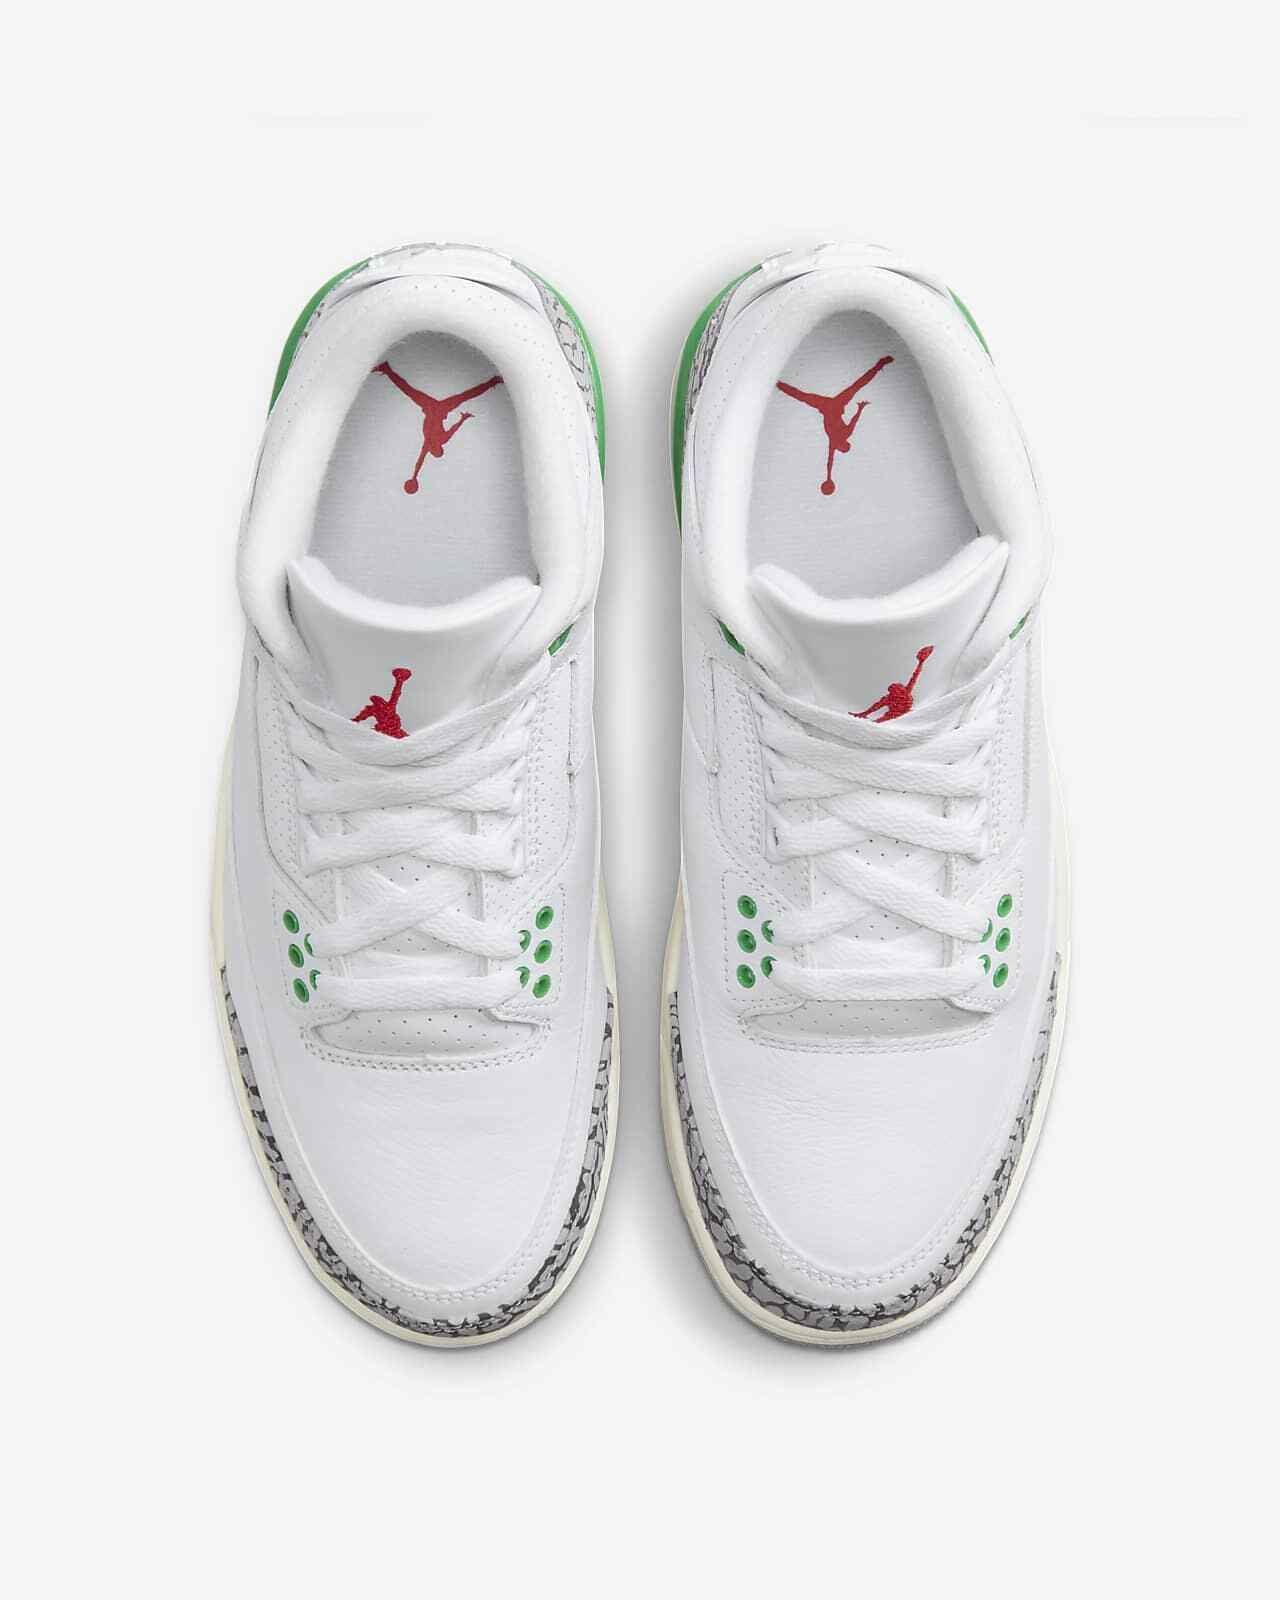 Nike WMNS Air Jordan 3 Retro "Lucky Green" CK9246-136 Sneakers New [US 5-8.5]